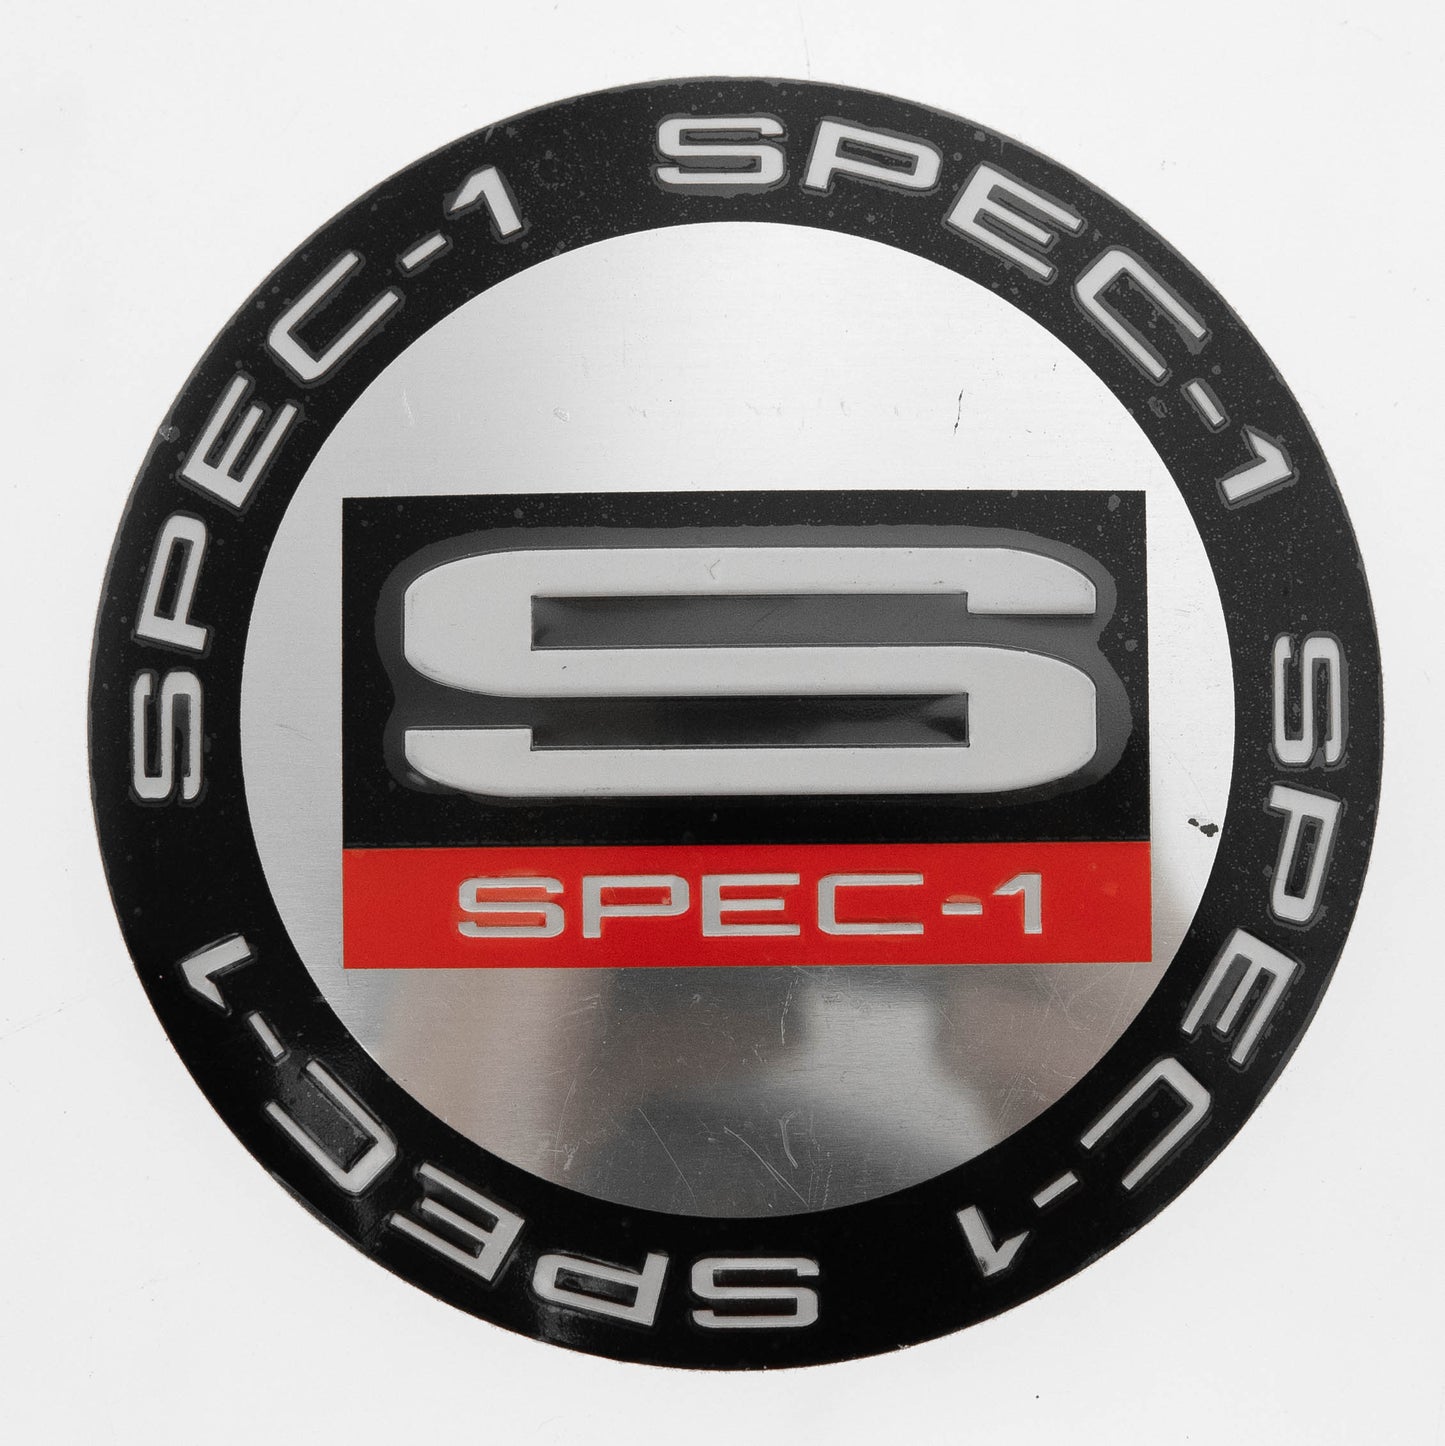 Spec-1 Cap Sticker Chrome Center W/ Black Ring For Sp-4, Sp-7, Sp-8, Sp-10, Sp-17, Sp-36, Sp-44, Sp-46, Sp-47, Sp-48, Sp-49, Sp-50, Sp-51, Sp-52, Sp-53, Sp-54, Sp-55, Sp-56, Spm-77, Spm-78, Spm-80, Spt-20, Spt-901